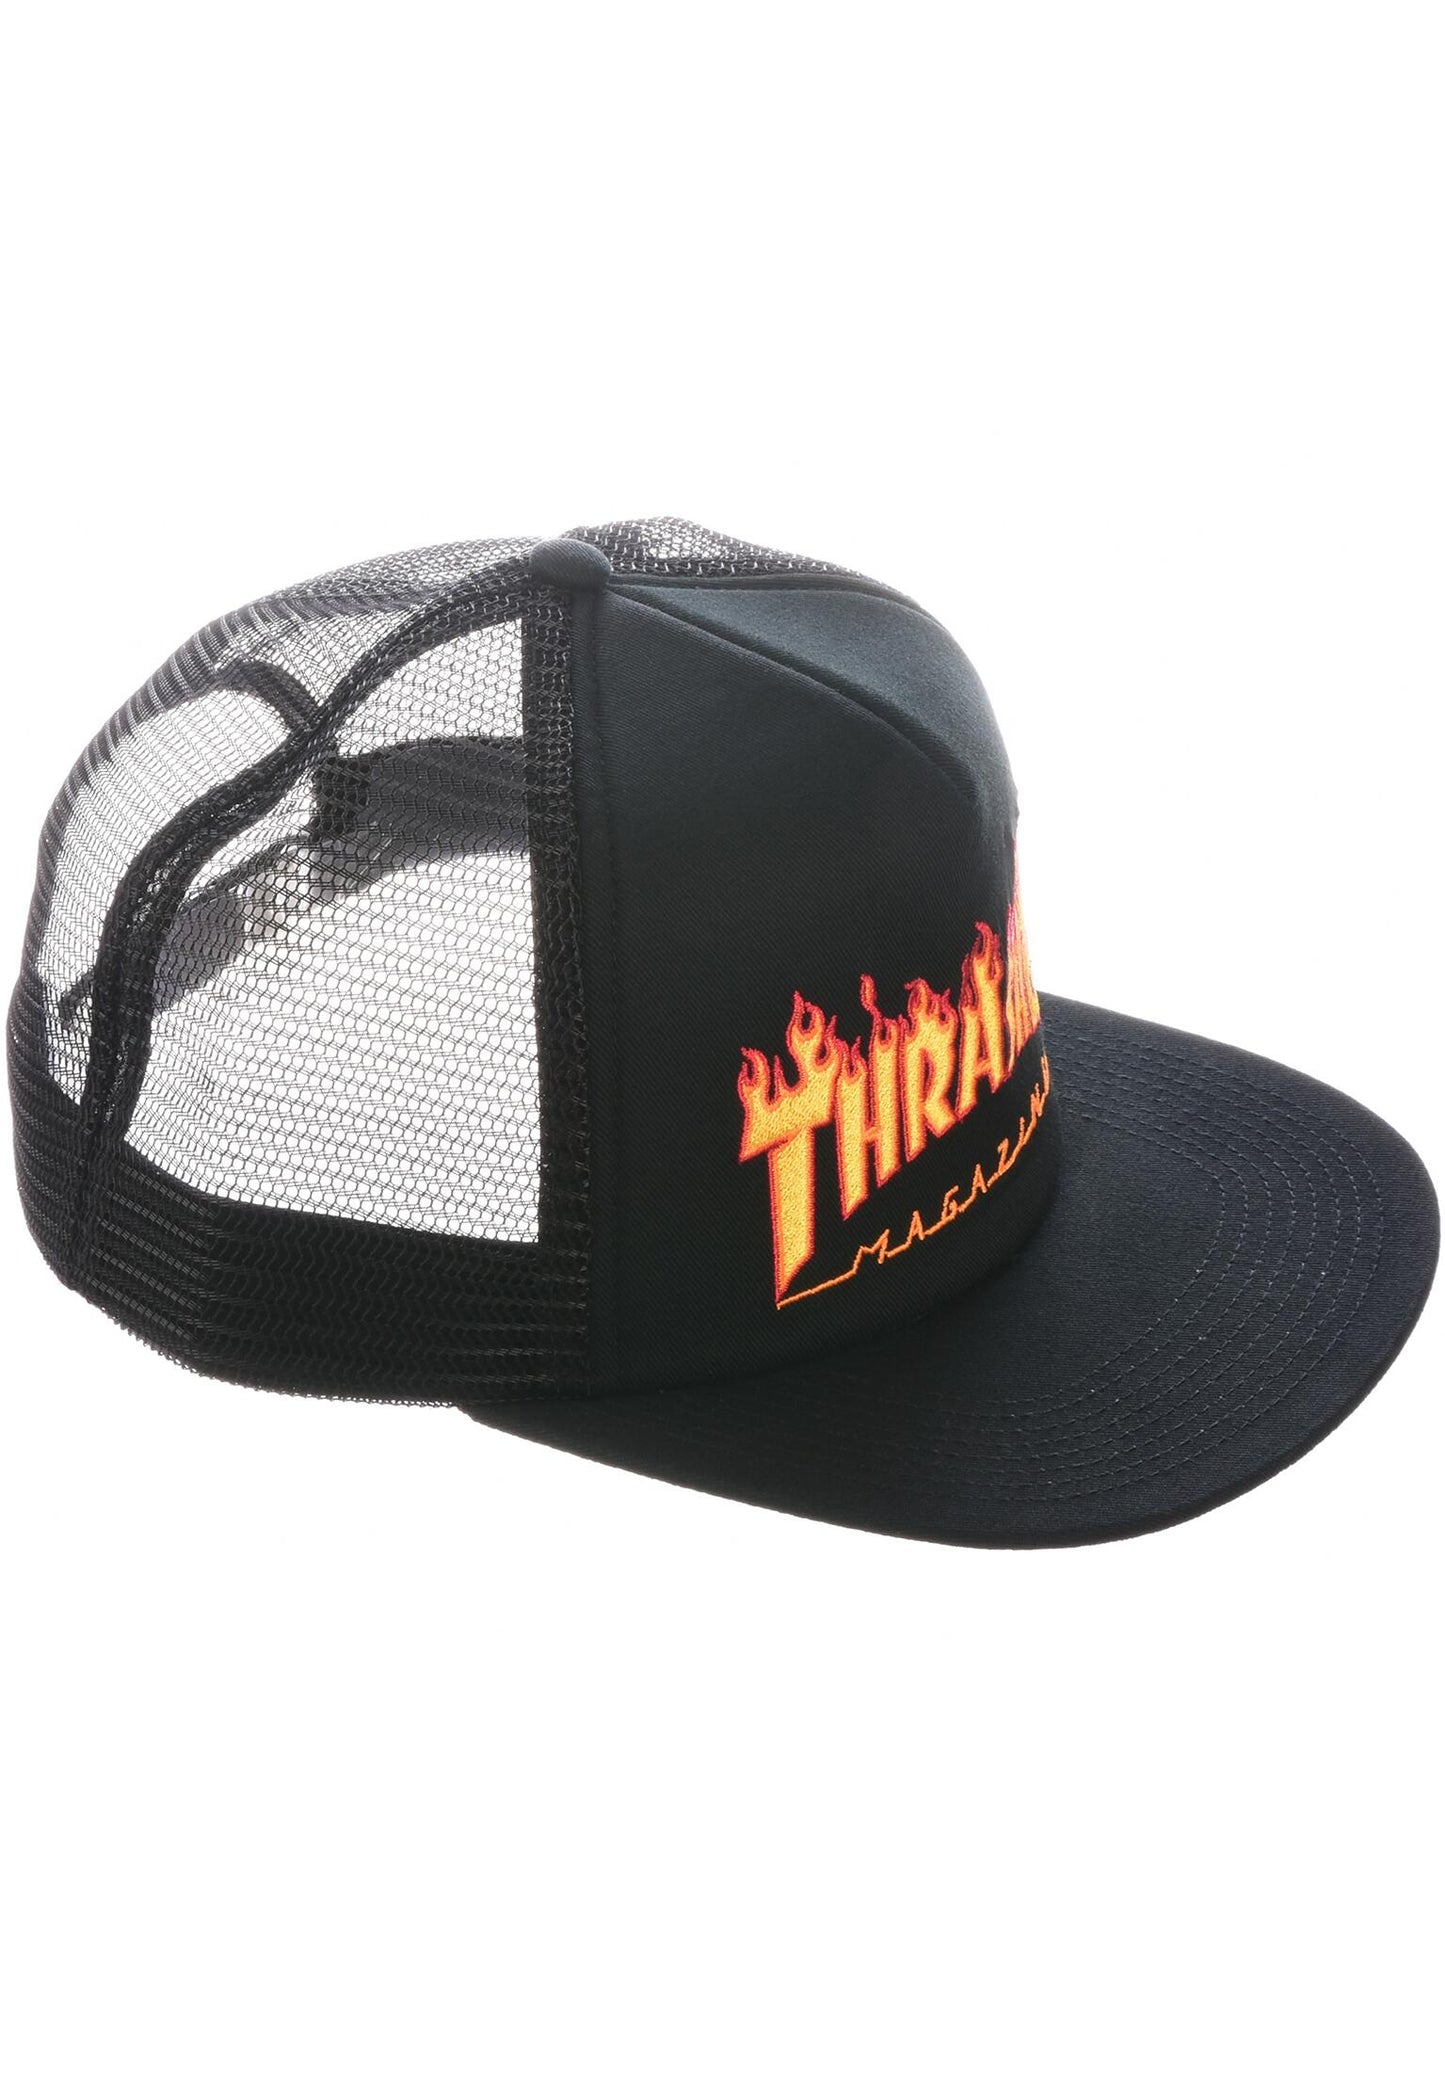 THRASHER - FLAME EMB MESH CAP - BLACK